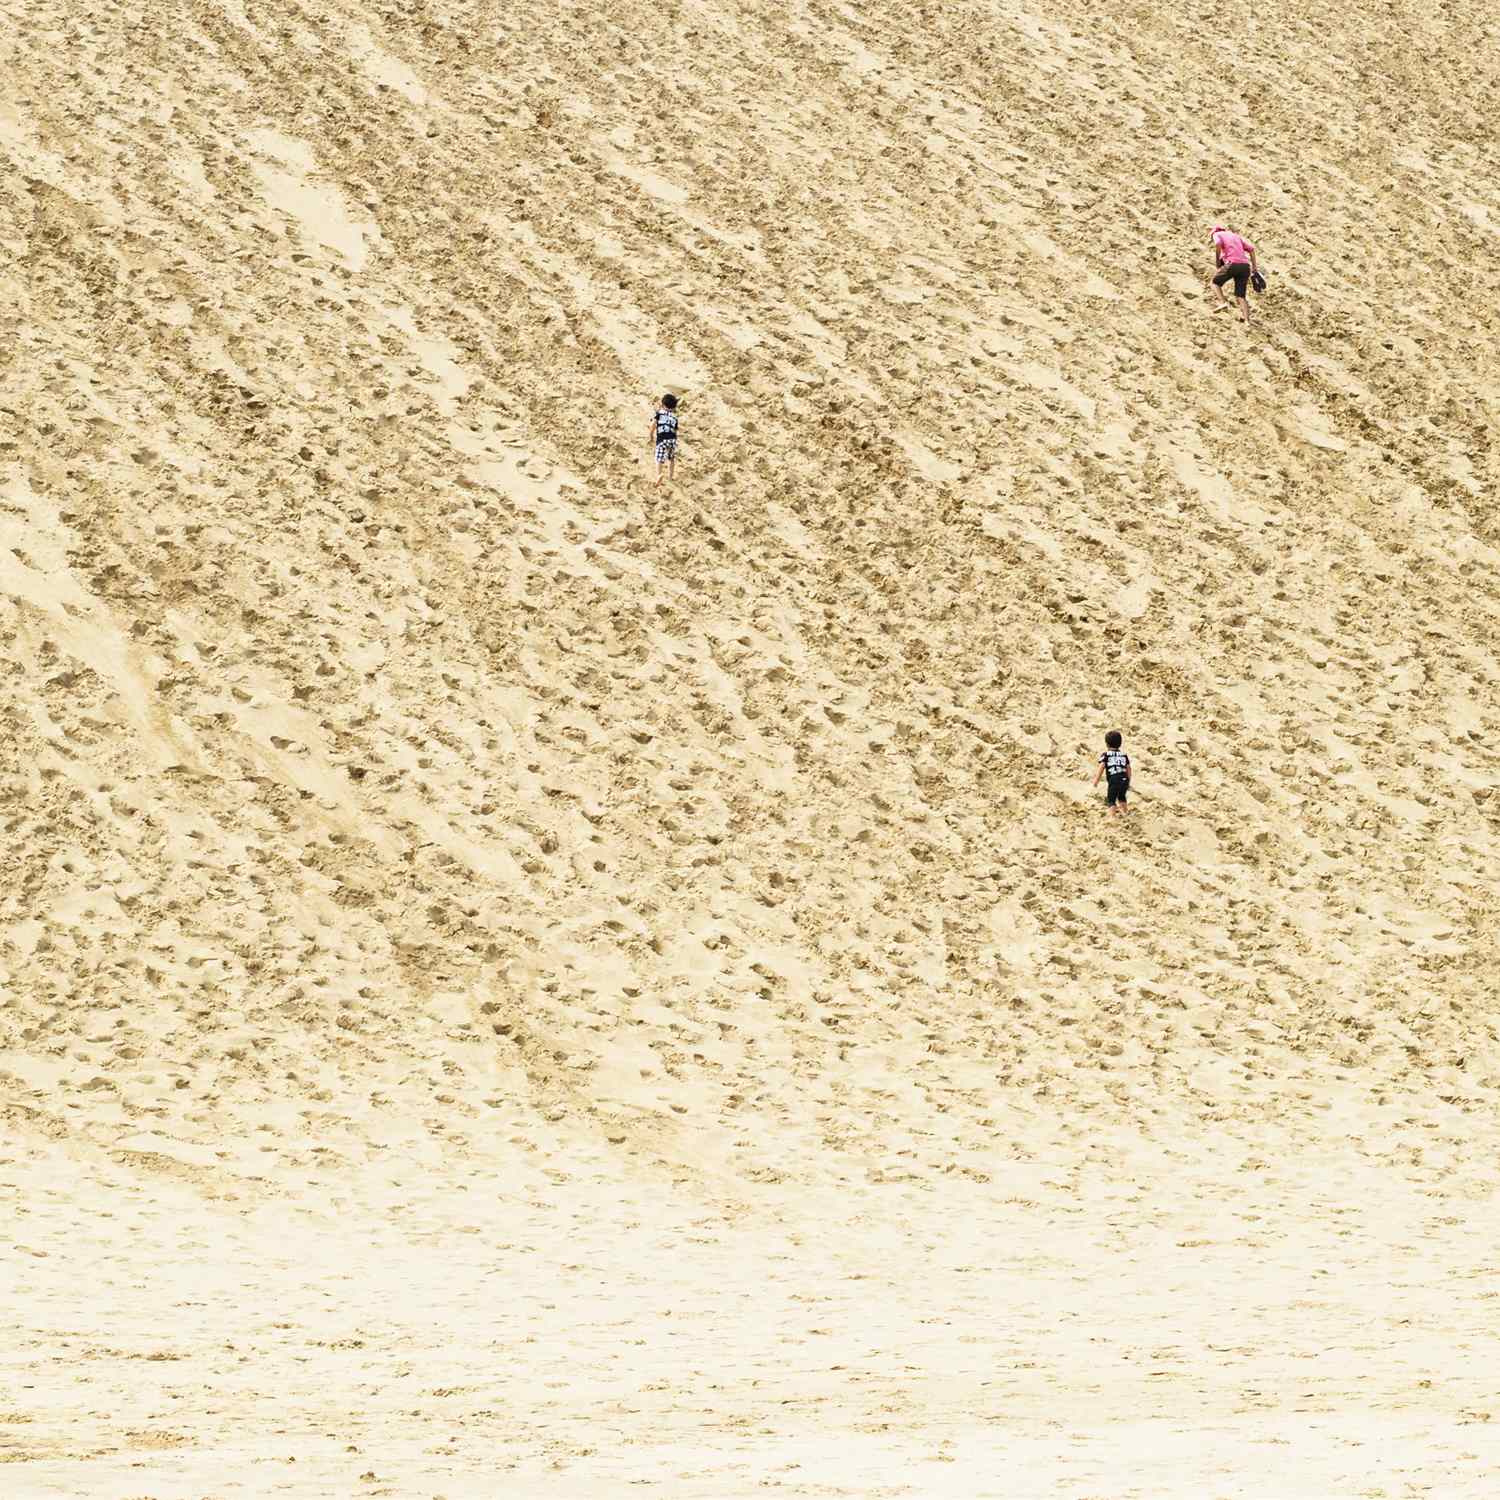 Tottori Sand Dunes in Tottori Orefecture = Shutterstock 2